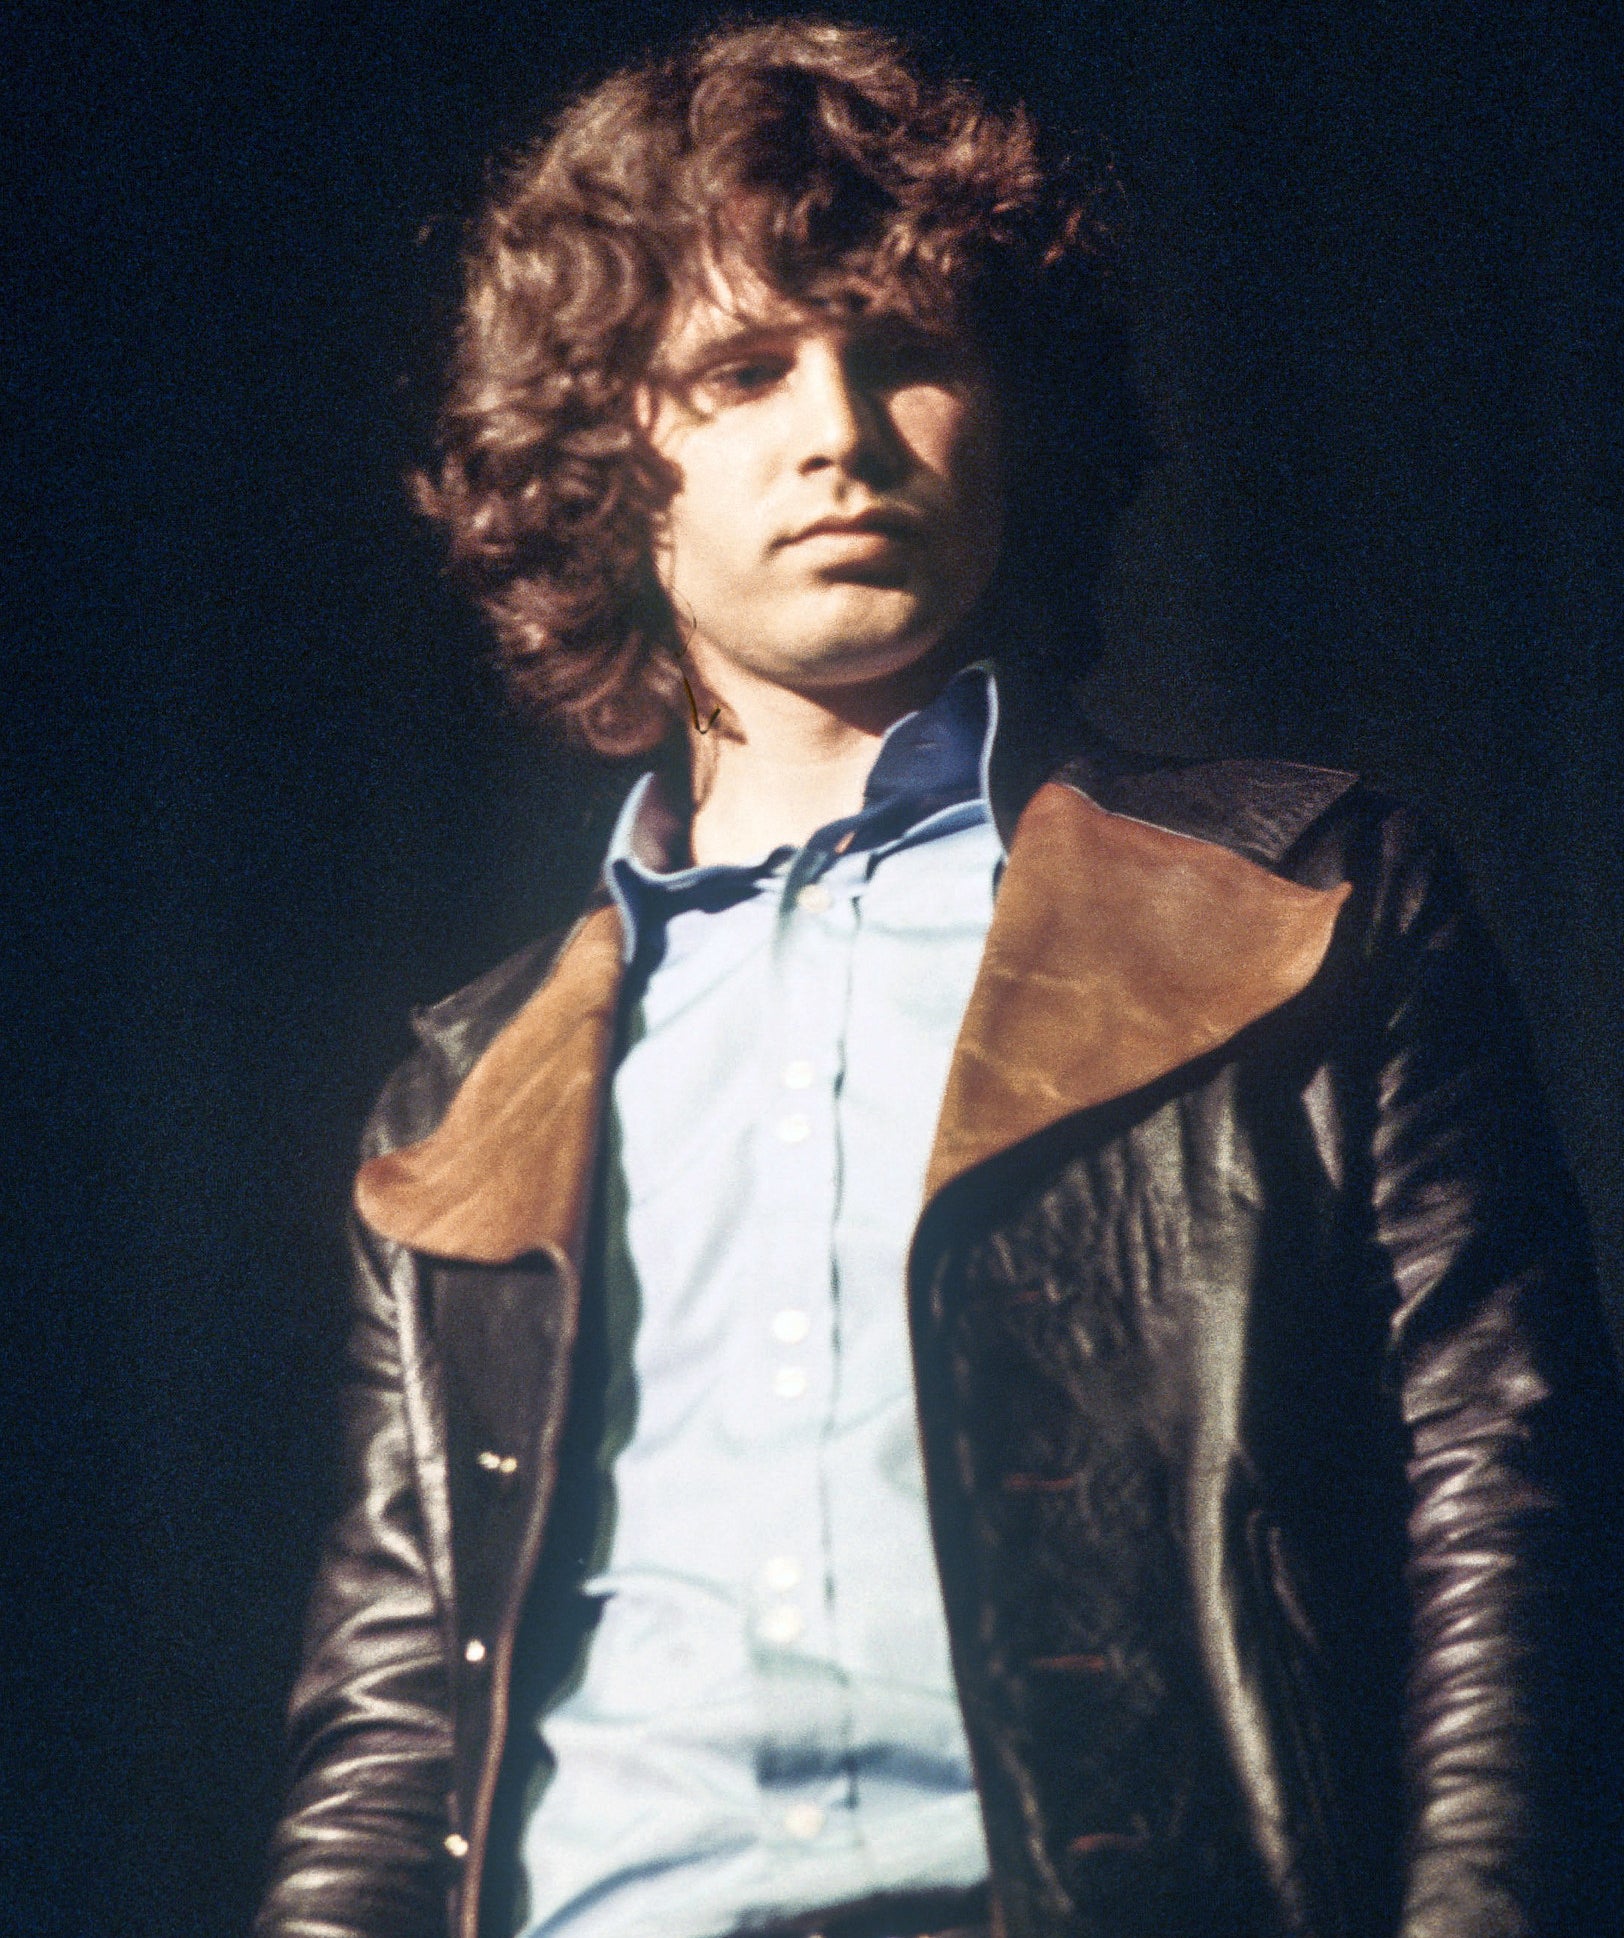 Jim Morrison looking down at something